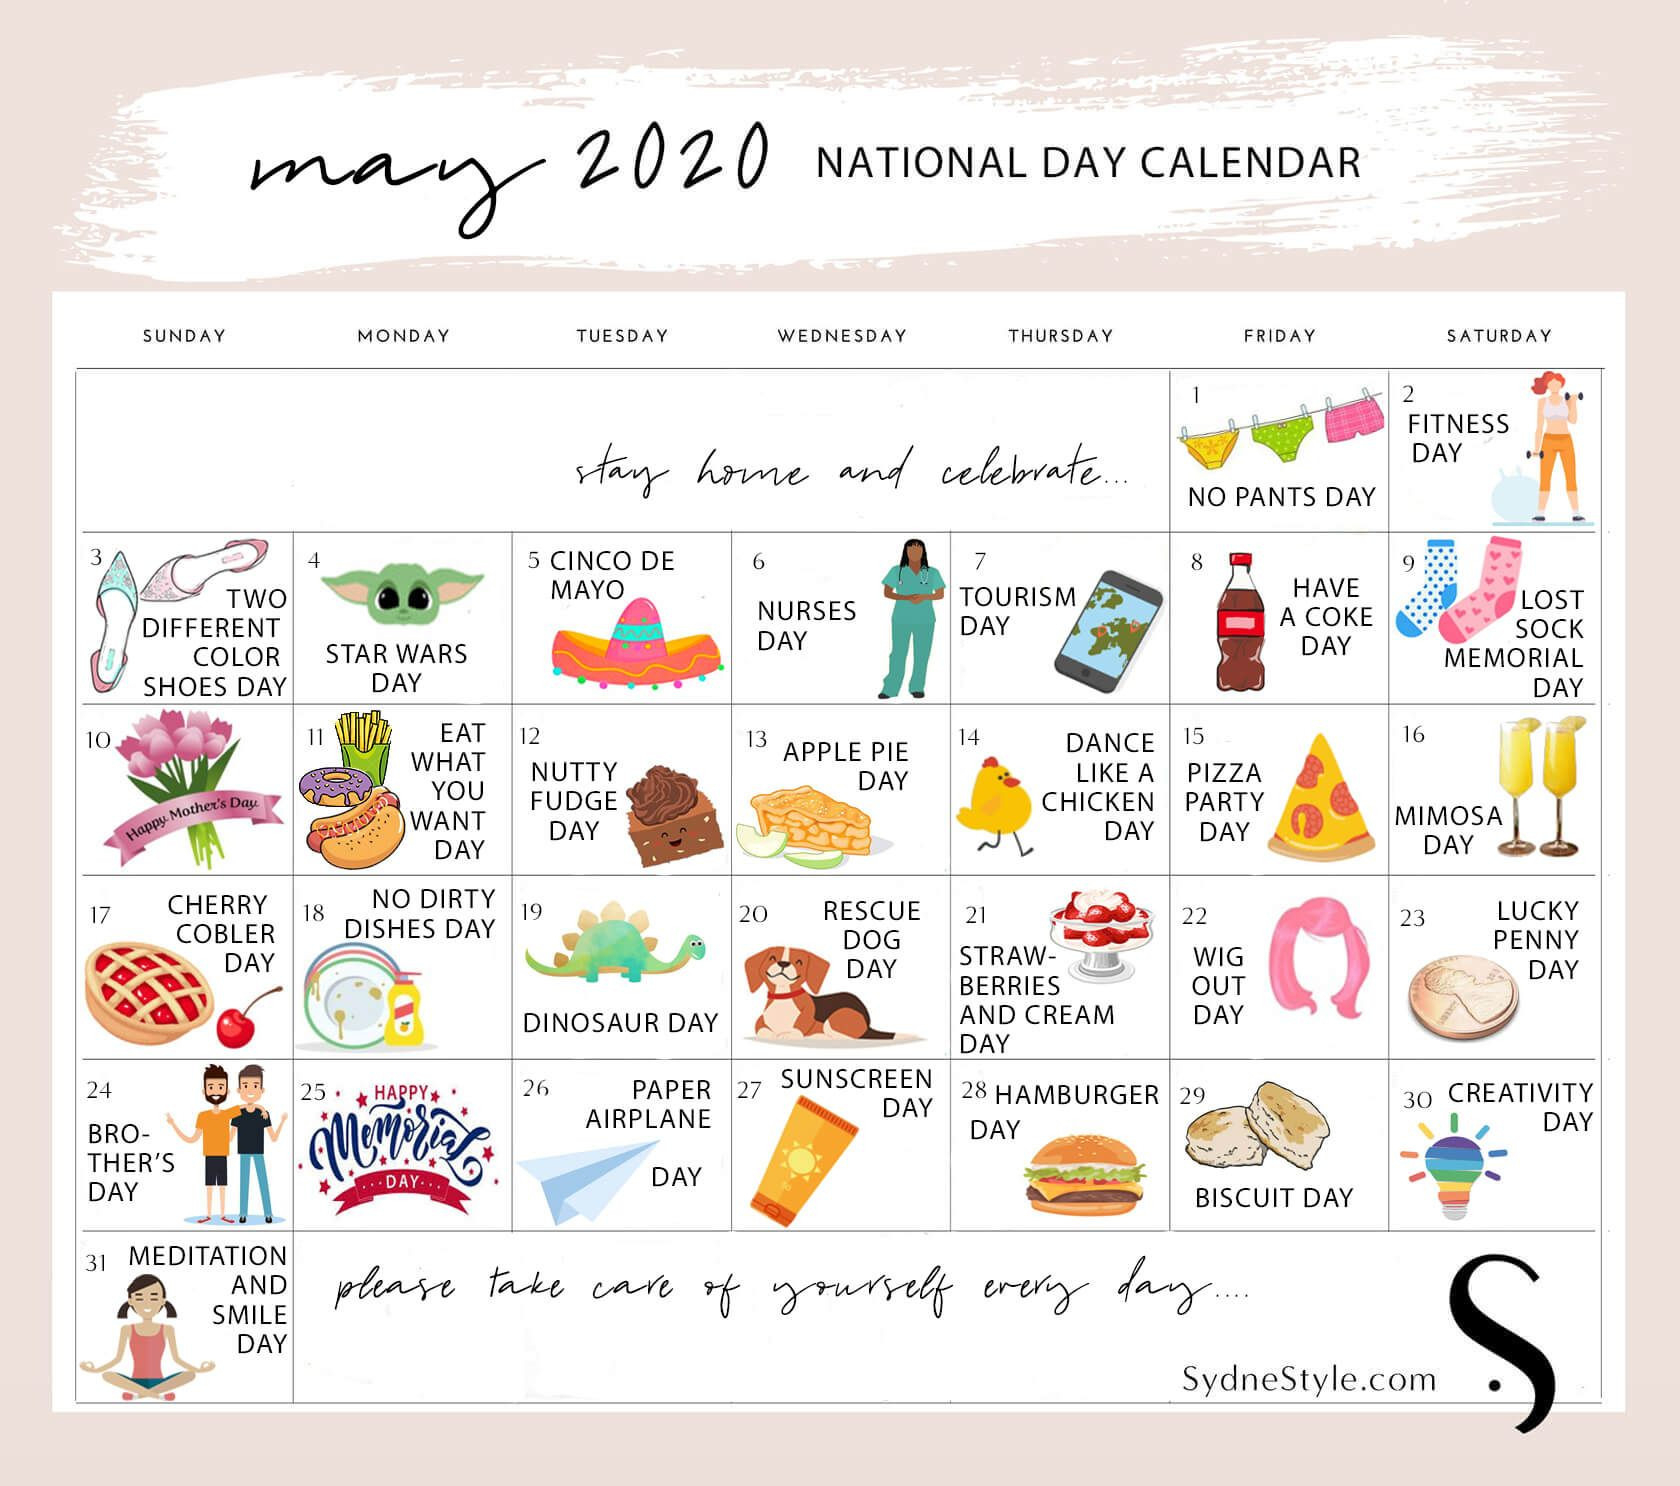 May National Days Calendar For 2020 | Sydne Style-National Food Holidays 2021 Printable